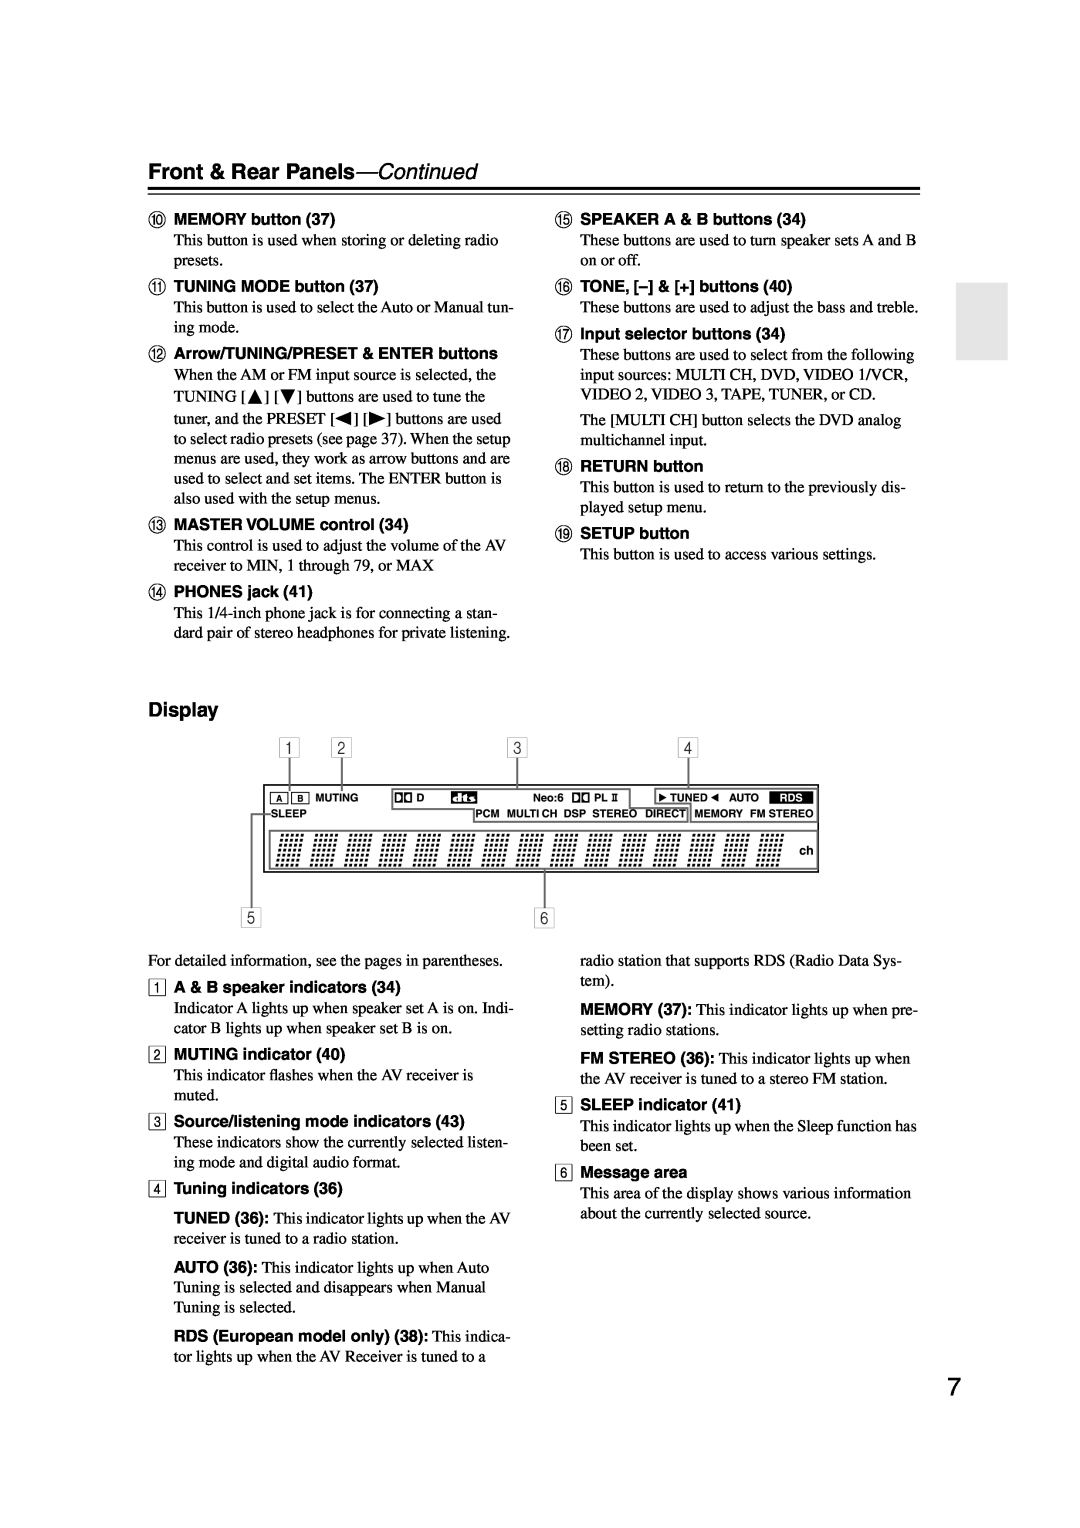 Onkyo TX-SR303E instruction manual Front & Rear Panels-Continued, Display 